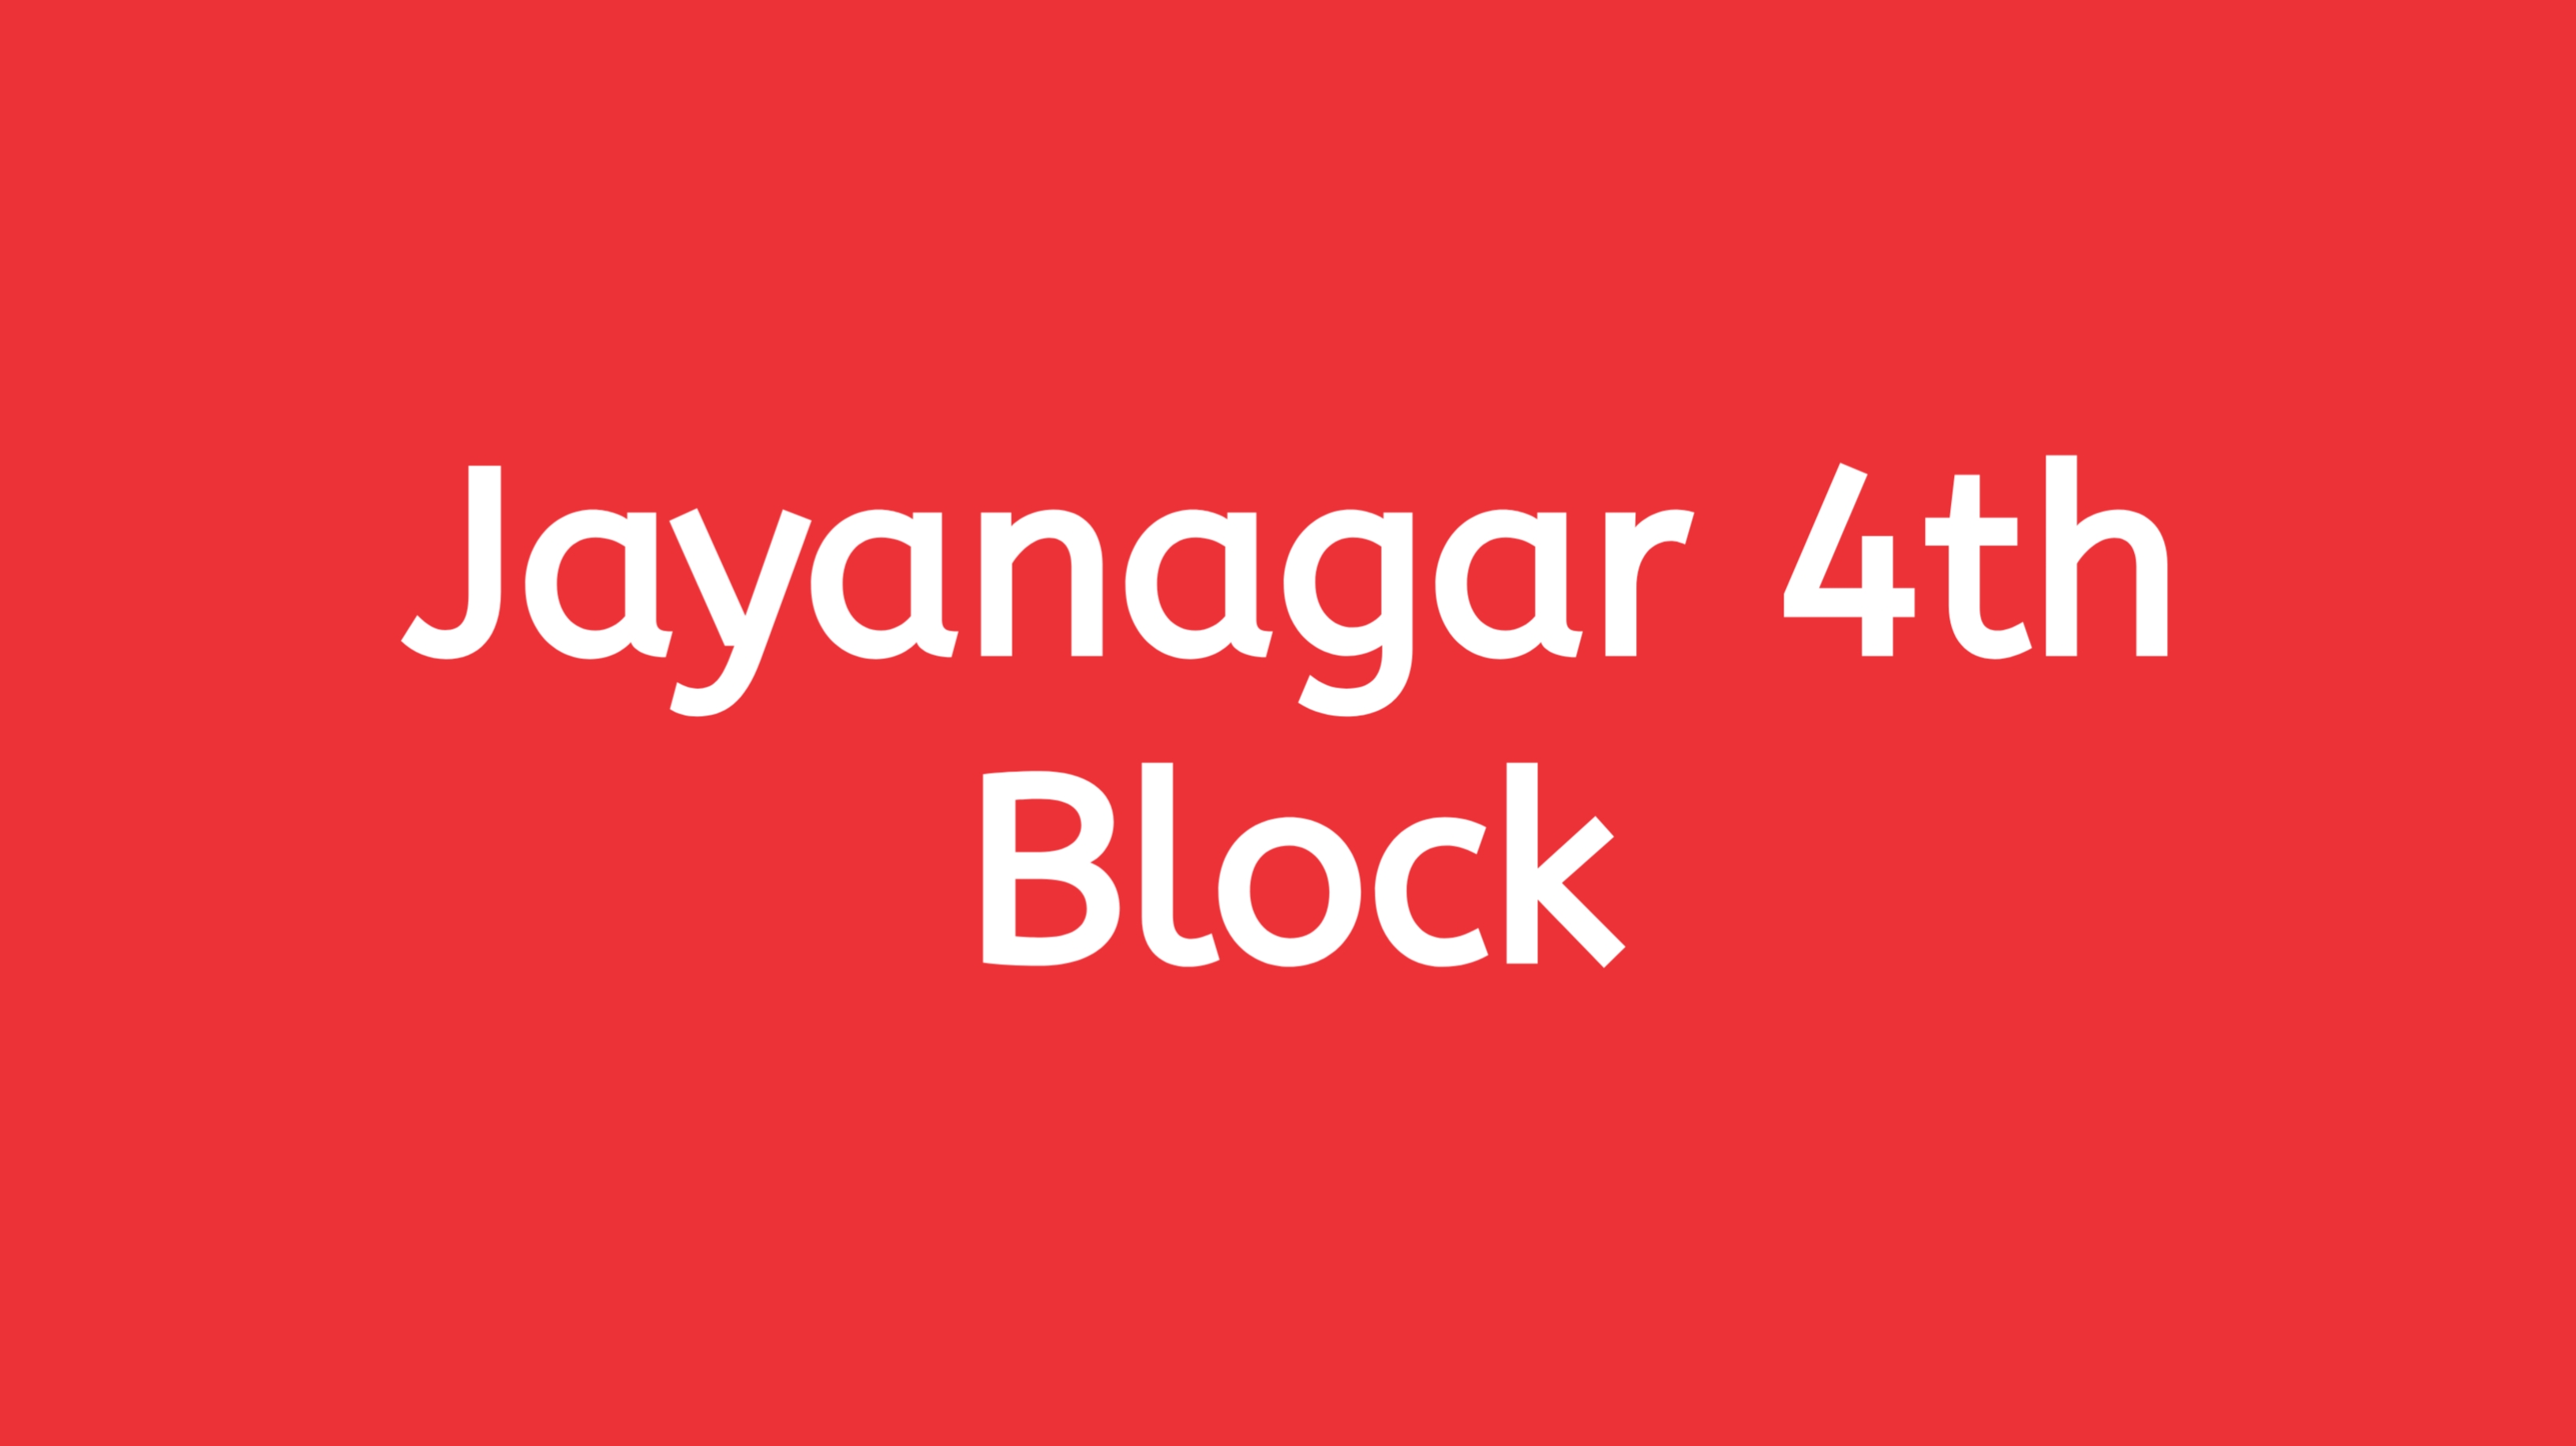 StayFit-Jayanagar - 4th Block